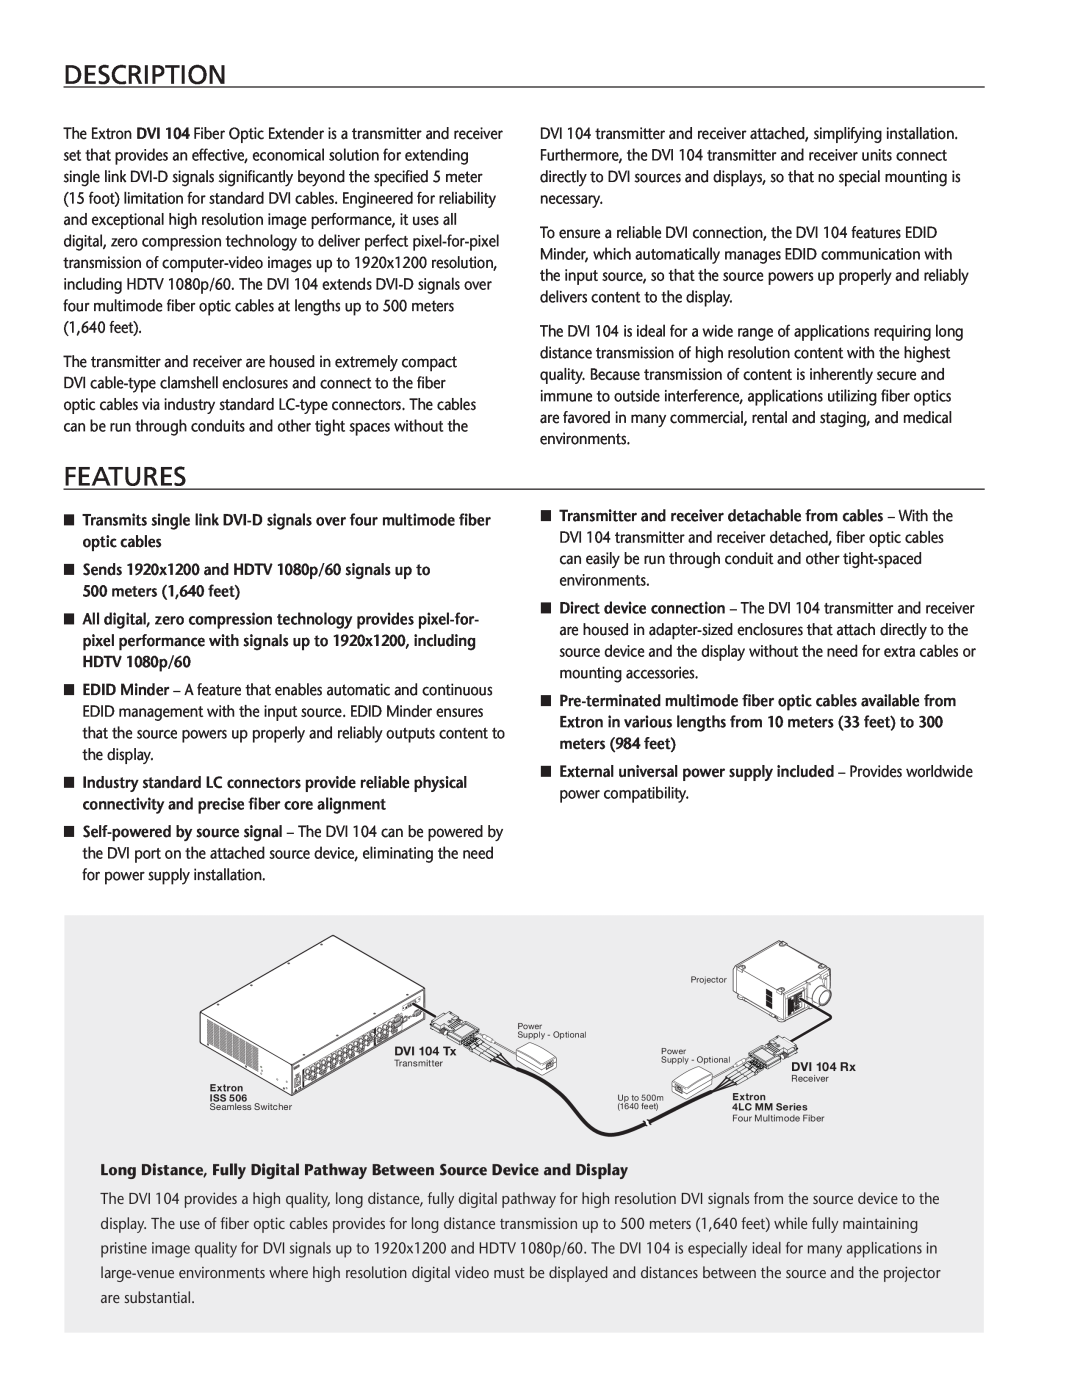 Extron electronic manual Description, Features, DVI 104 Tx, DVI 104 Rx 